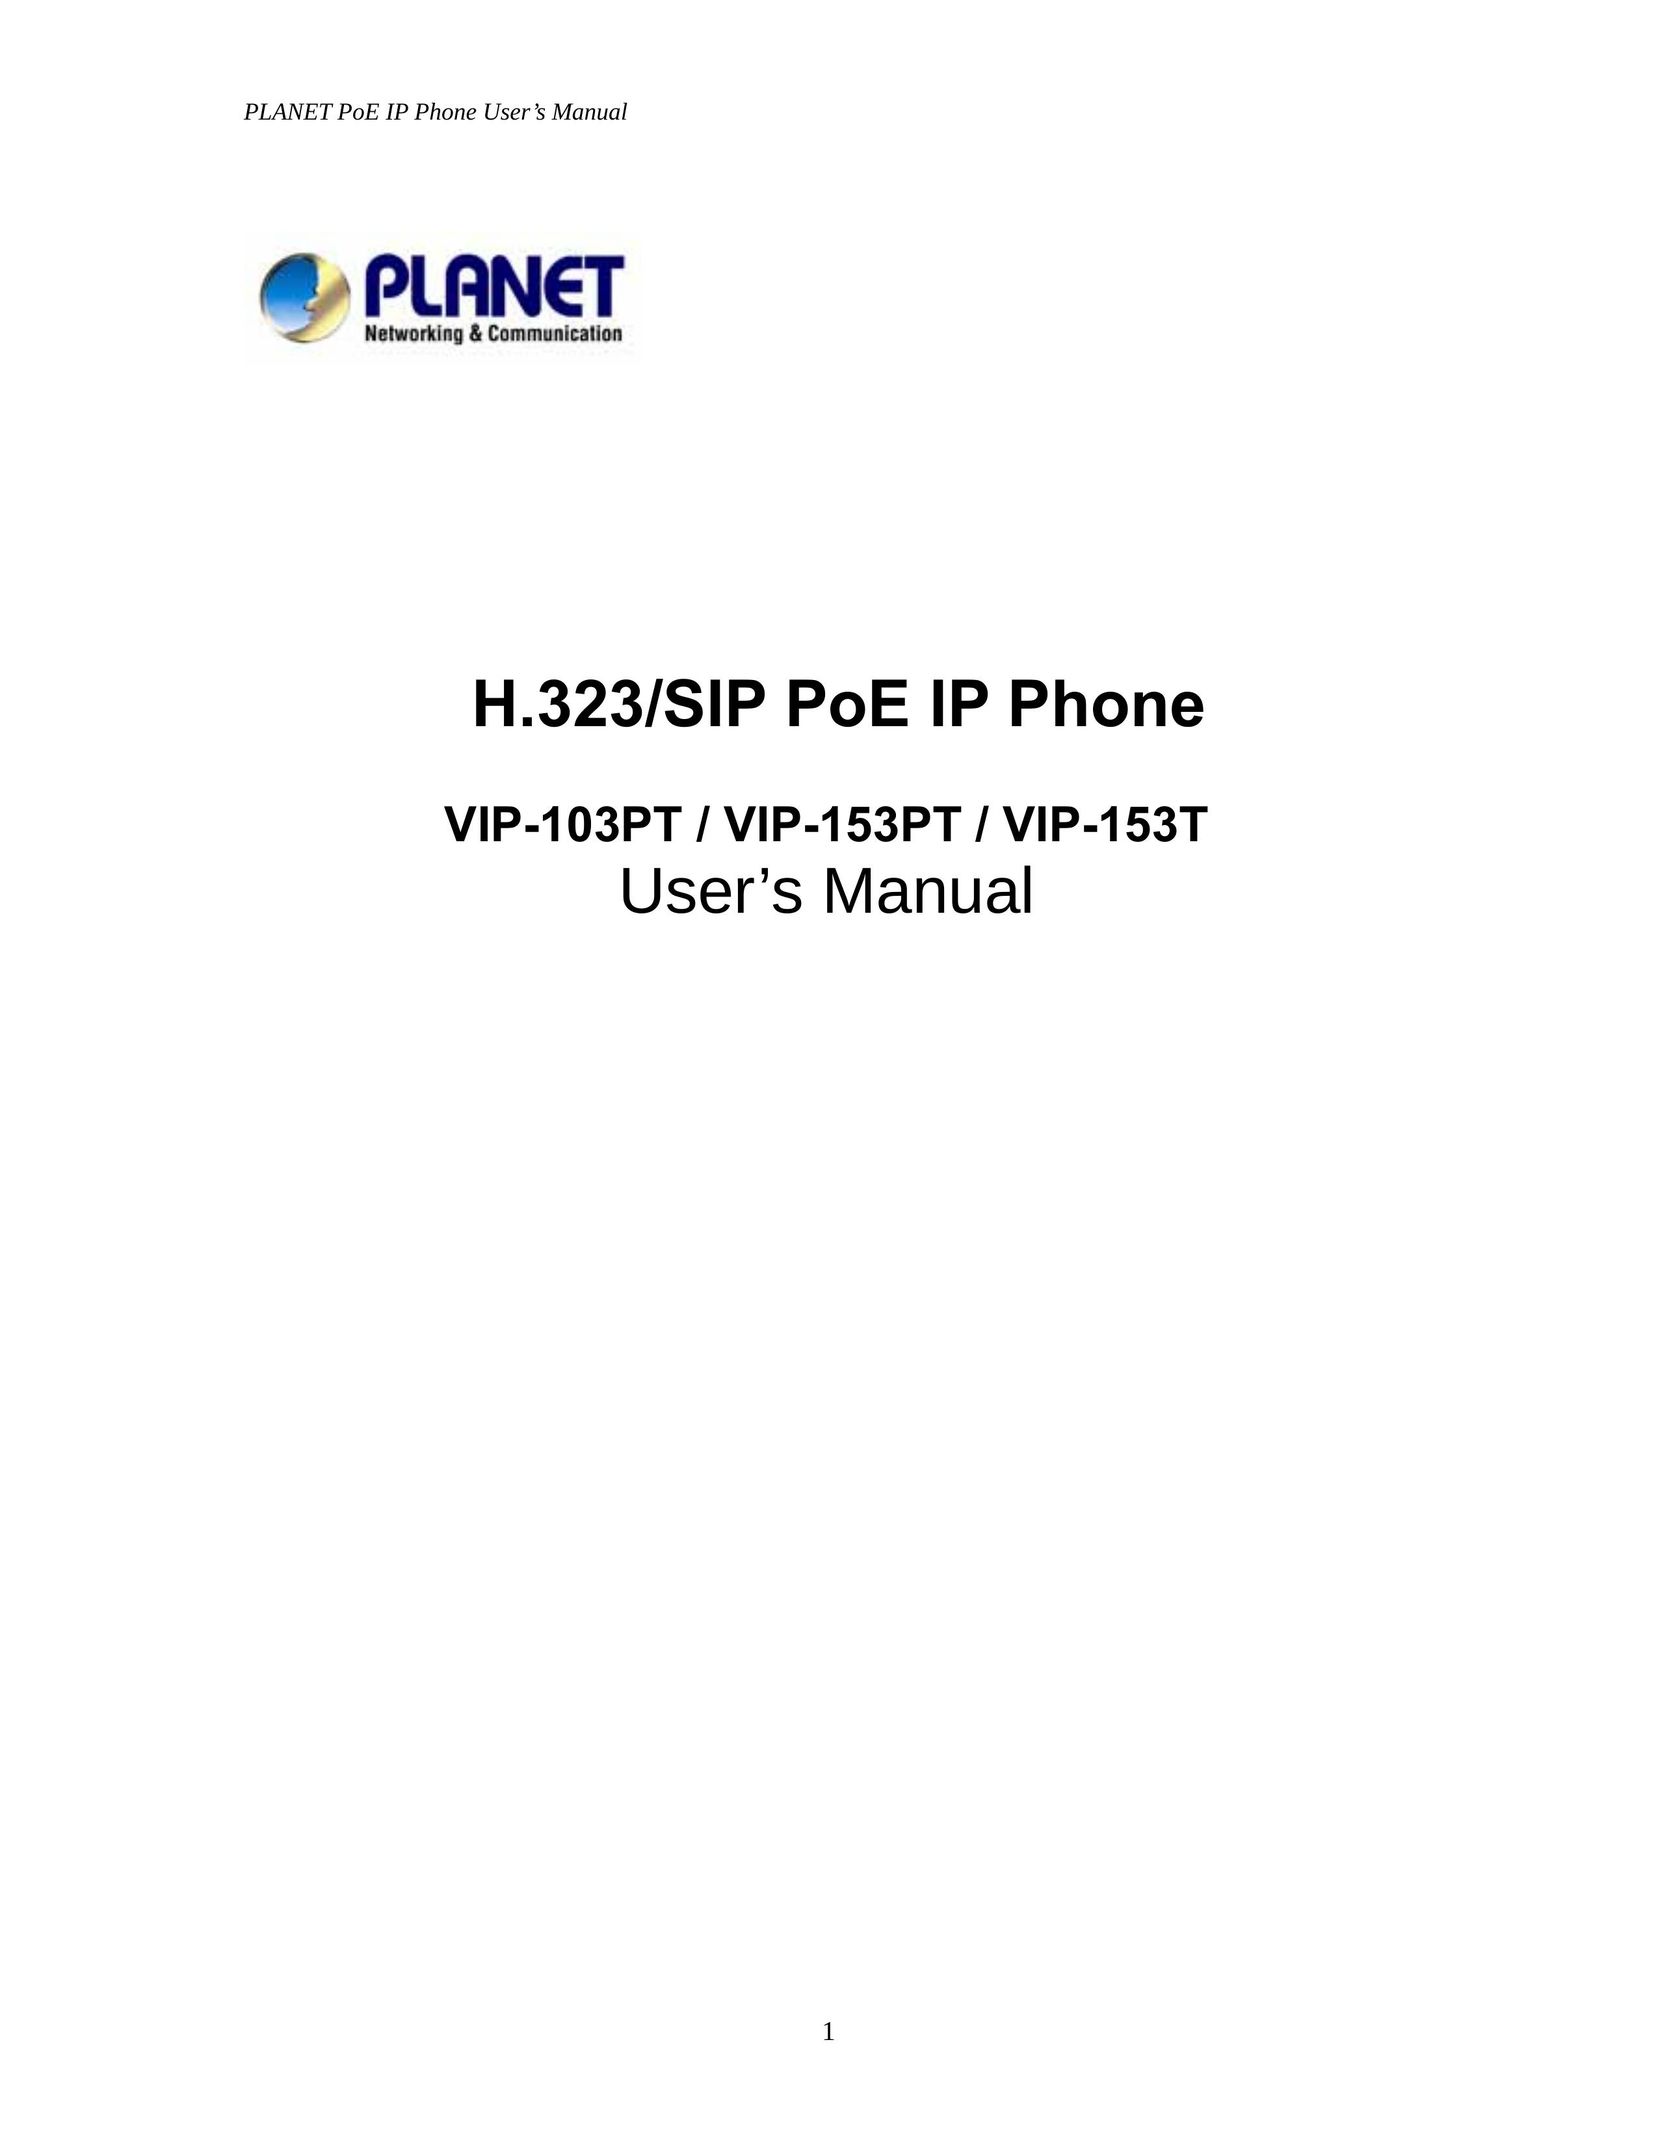 Planet Technology VIP-103PT Telephone User Manual